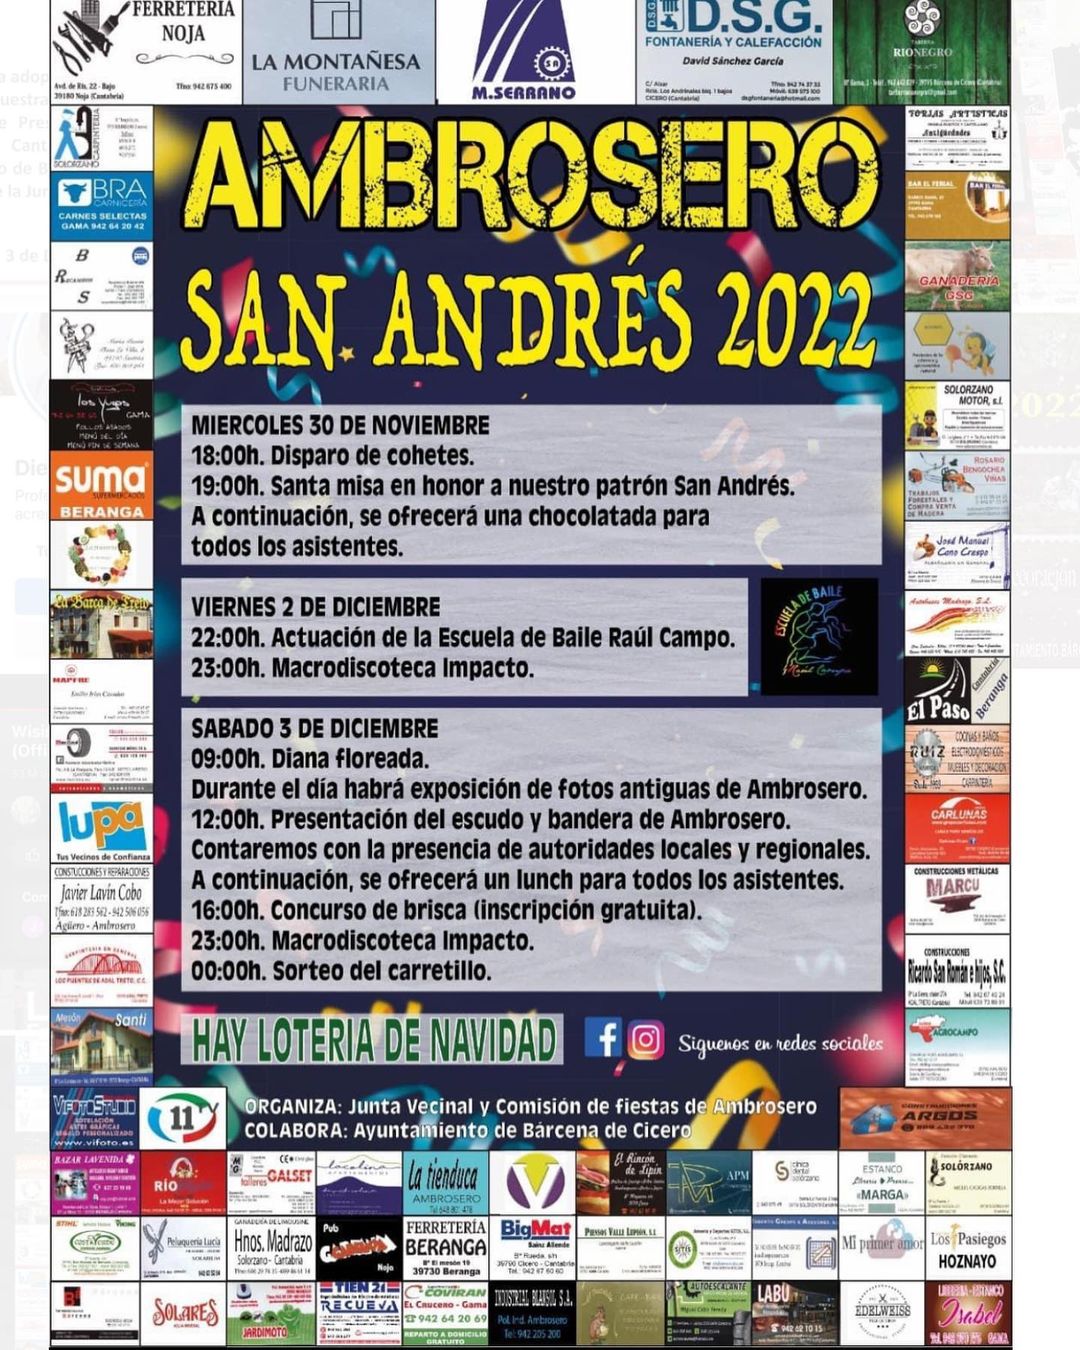 San Andrés 2022 - Ambrosero